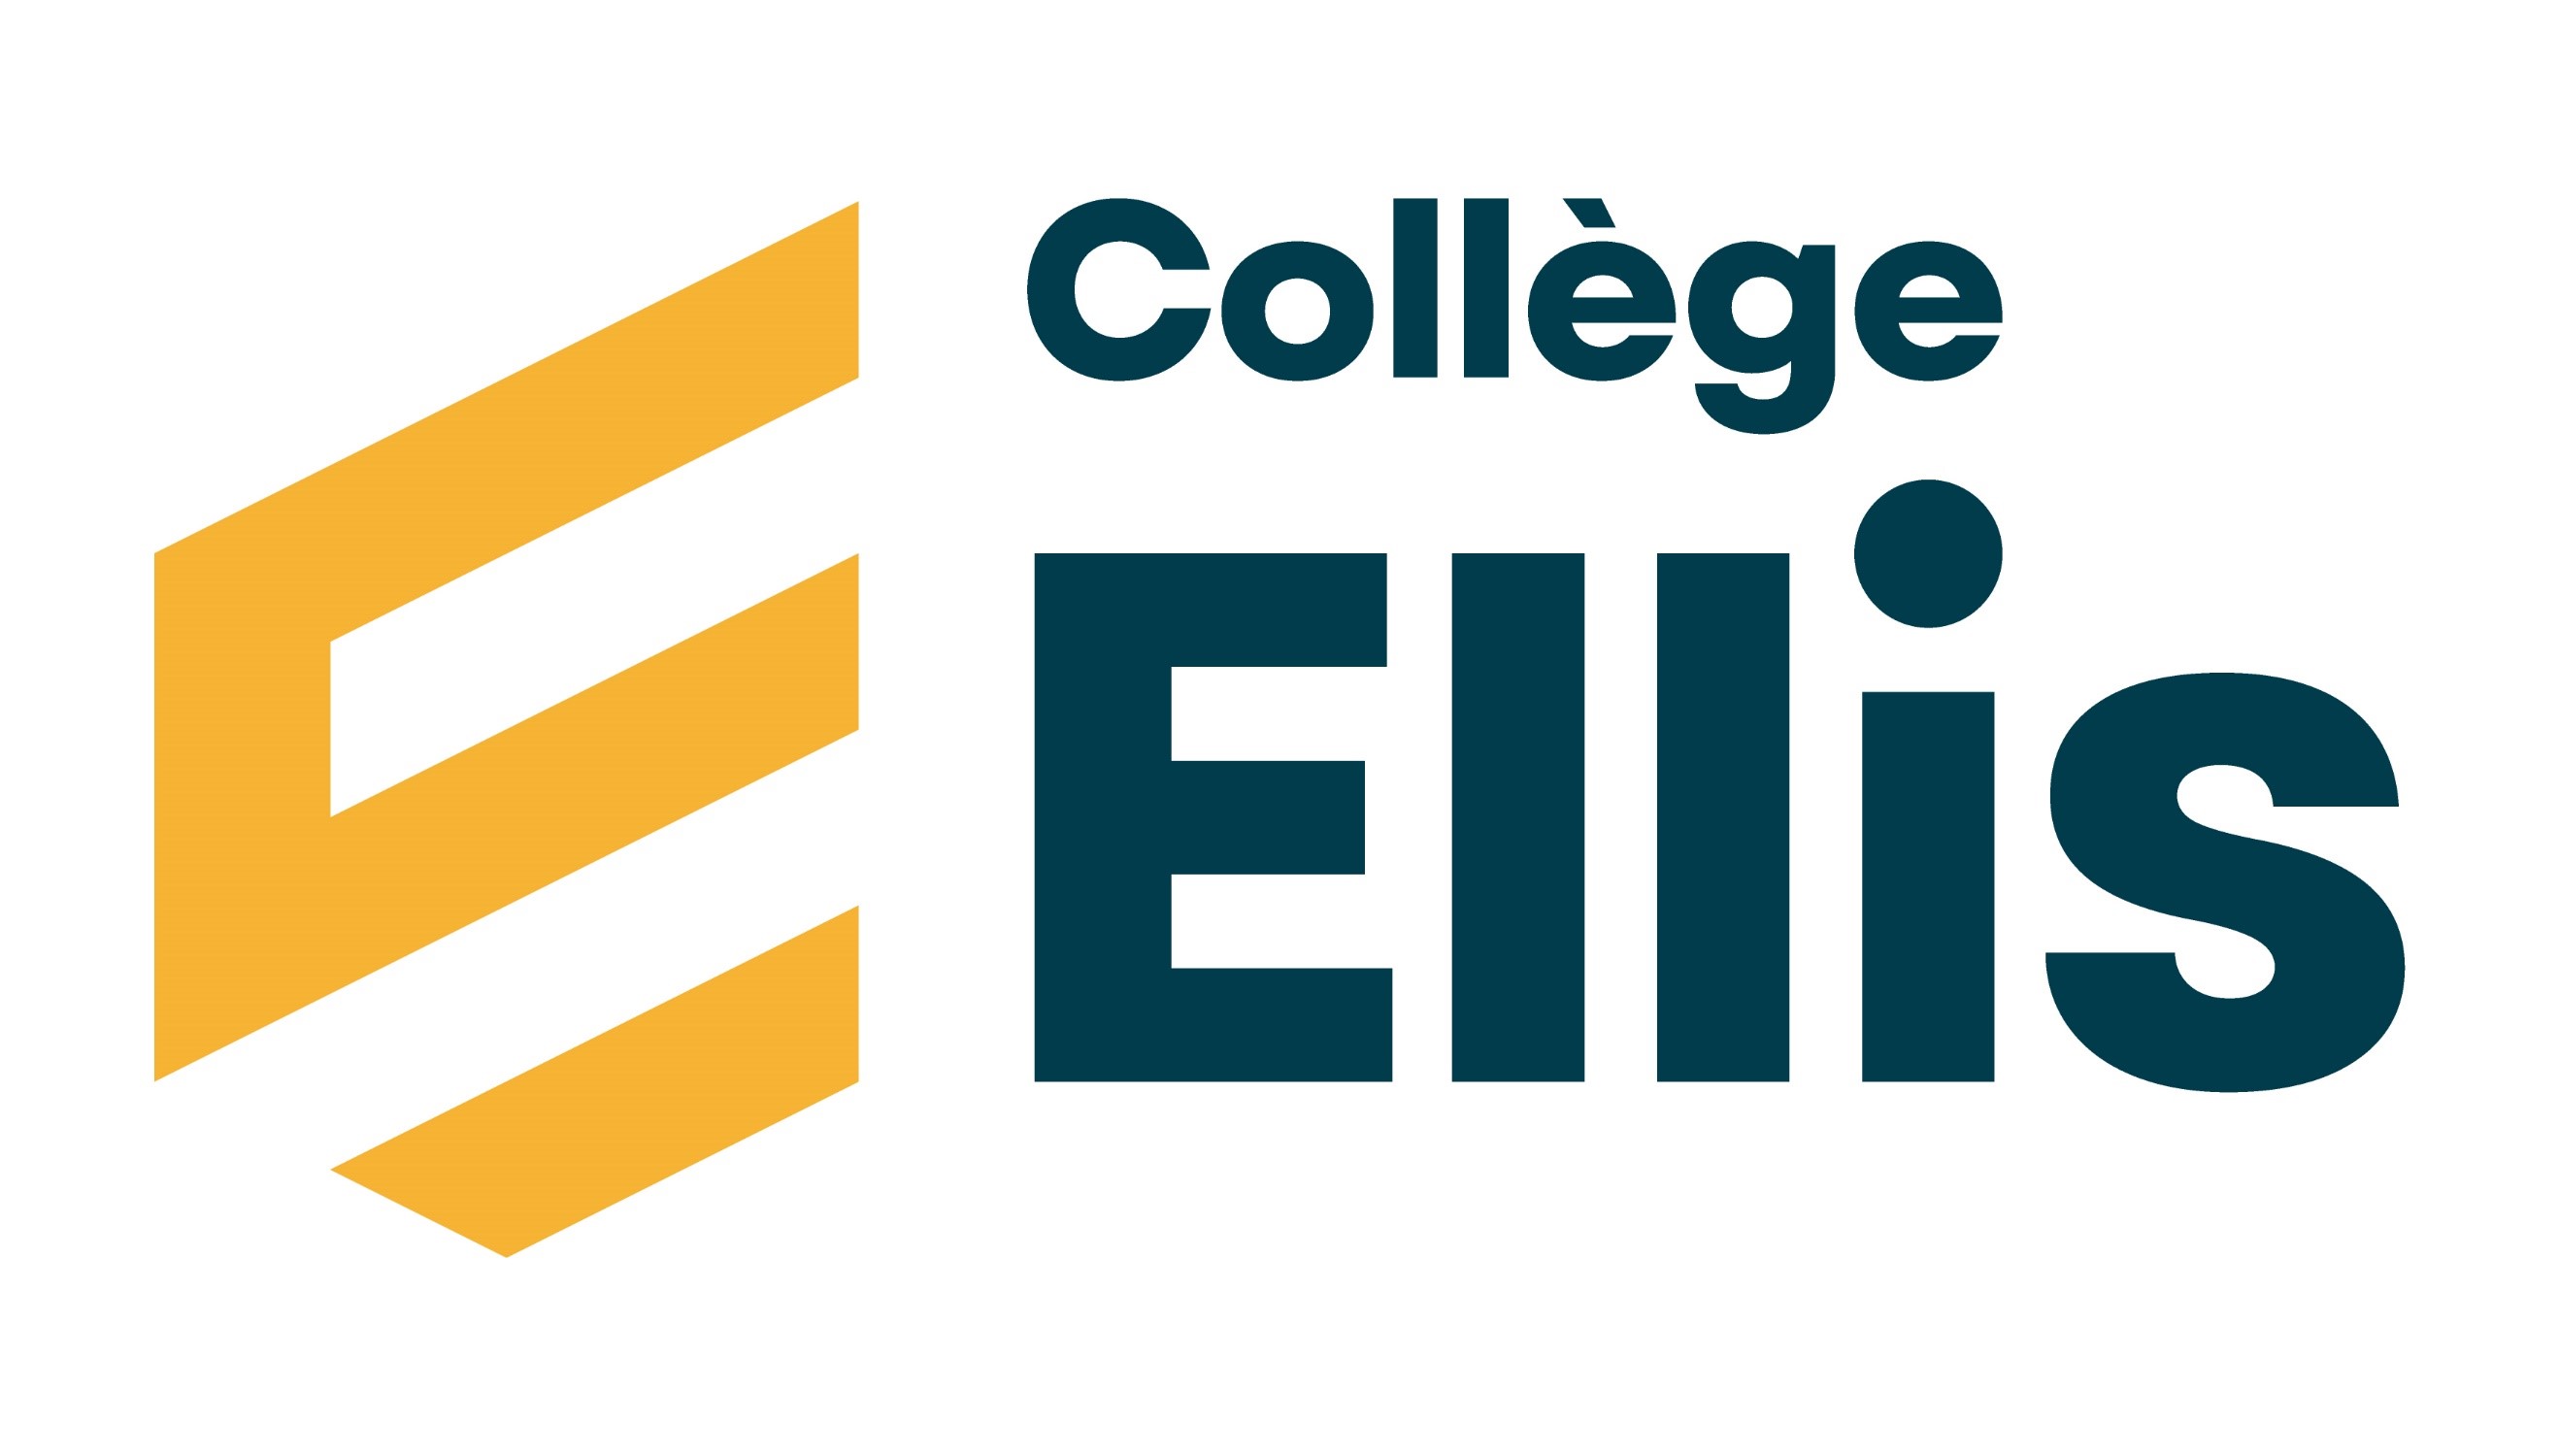 Collège Ellis